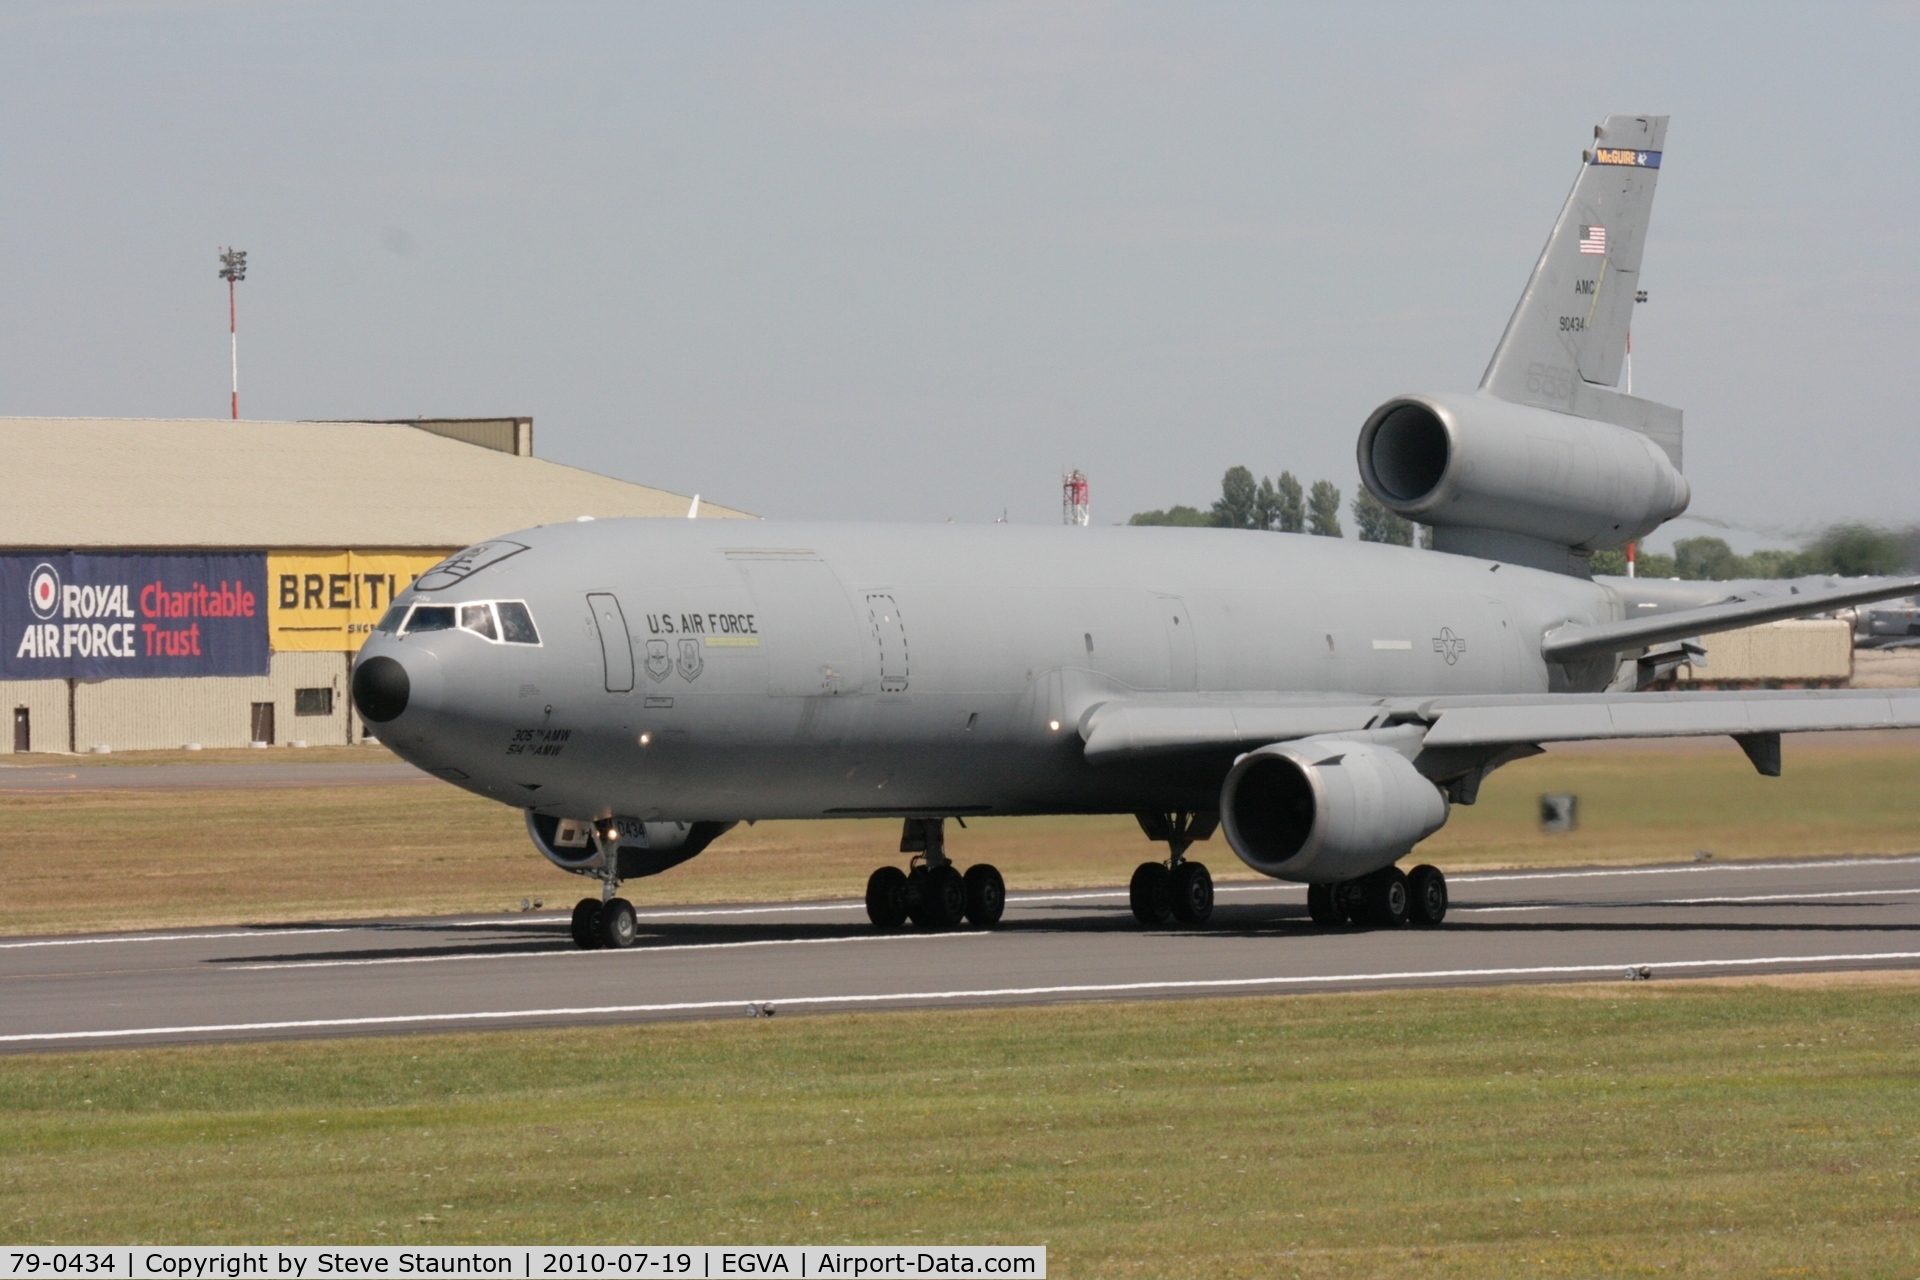 79-0434, 1979 McDonnell Douglas KC-10A Extender C/N 48201, Taken at the Royal International Air Tattoo 2010